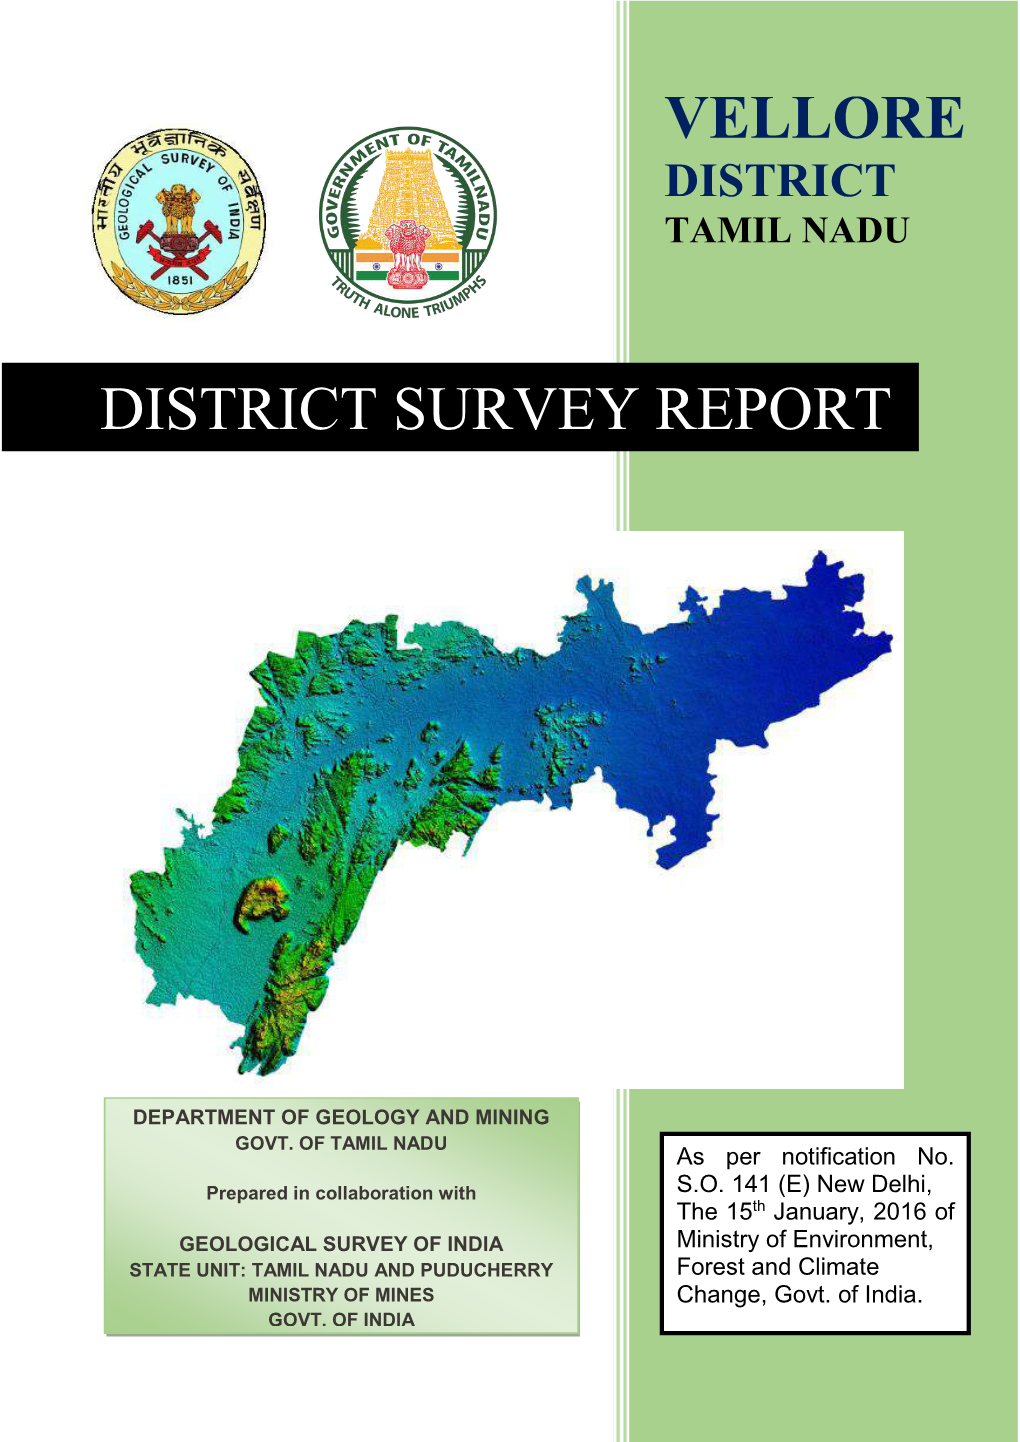 Vellore District Tamil Nadu